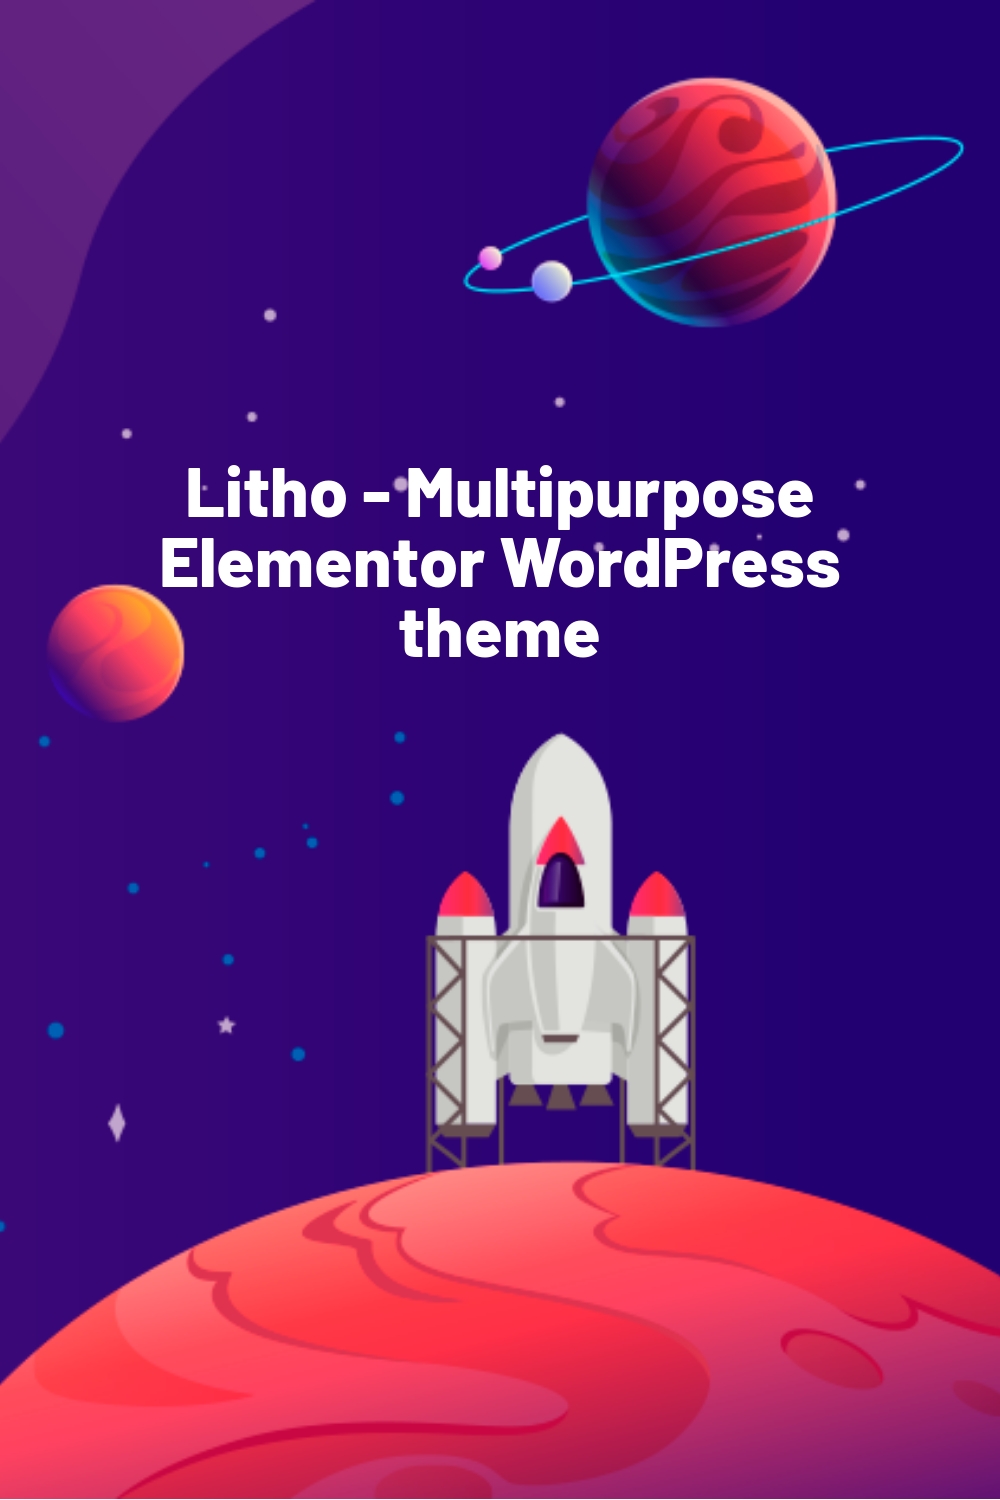 Litho – Multipurpose Elementor WordPress theme